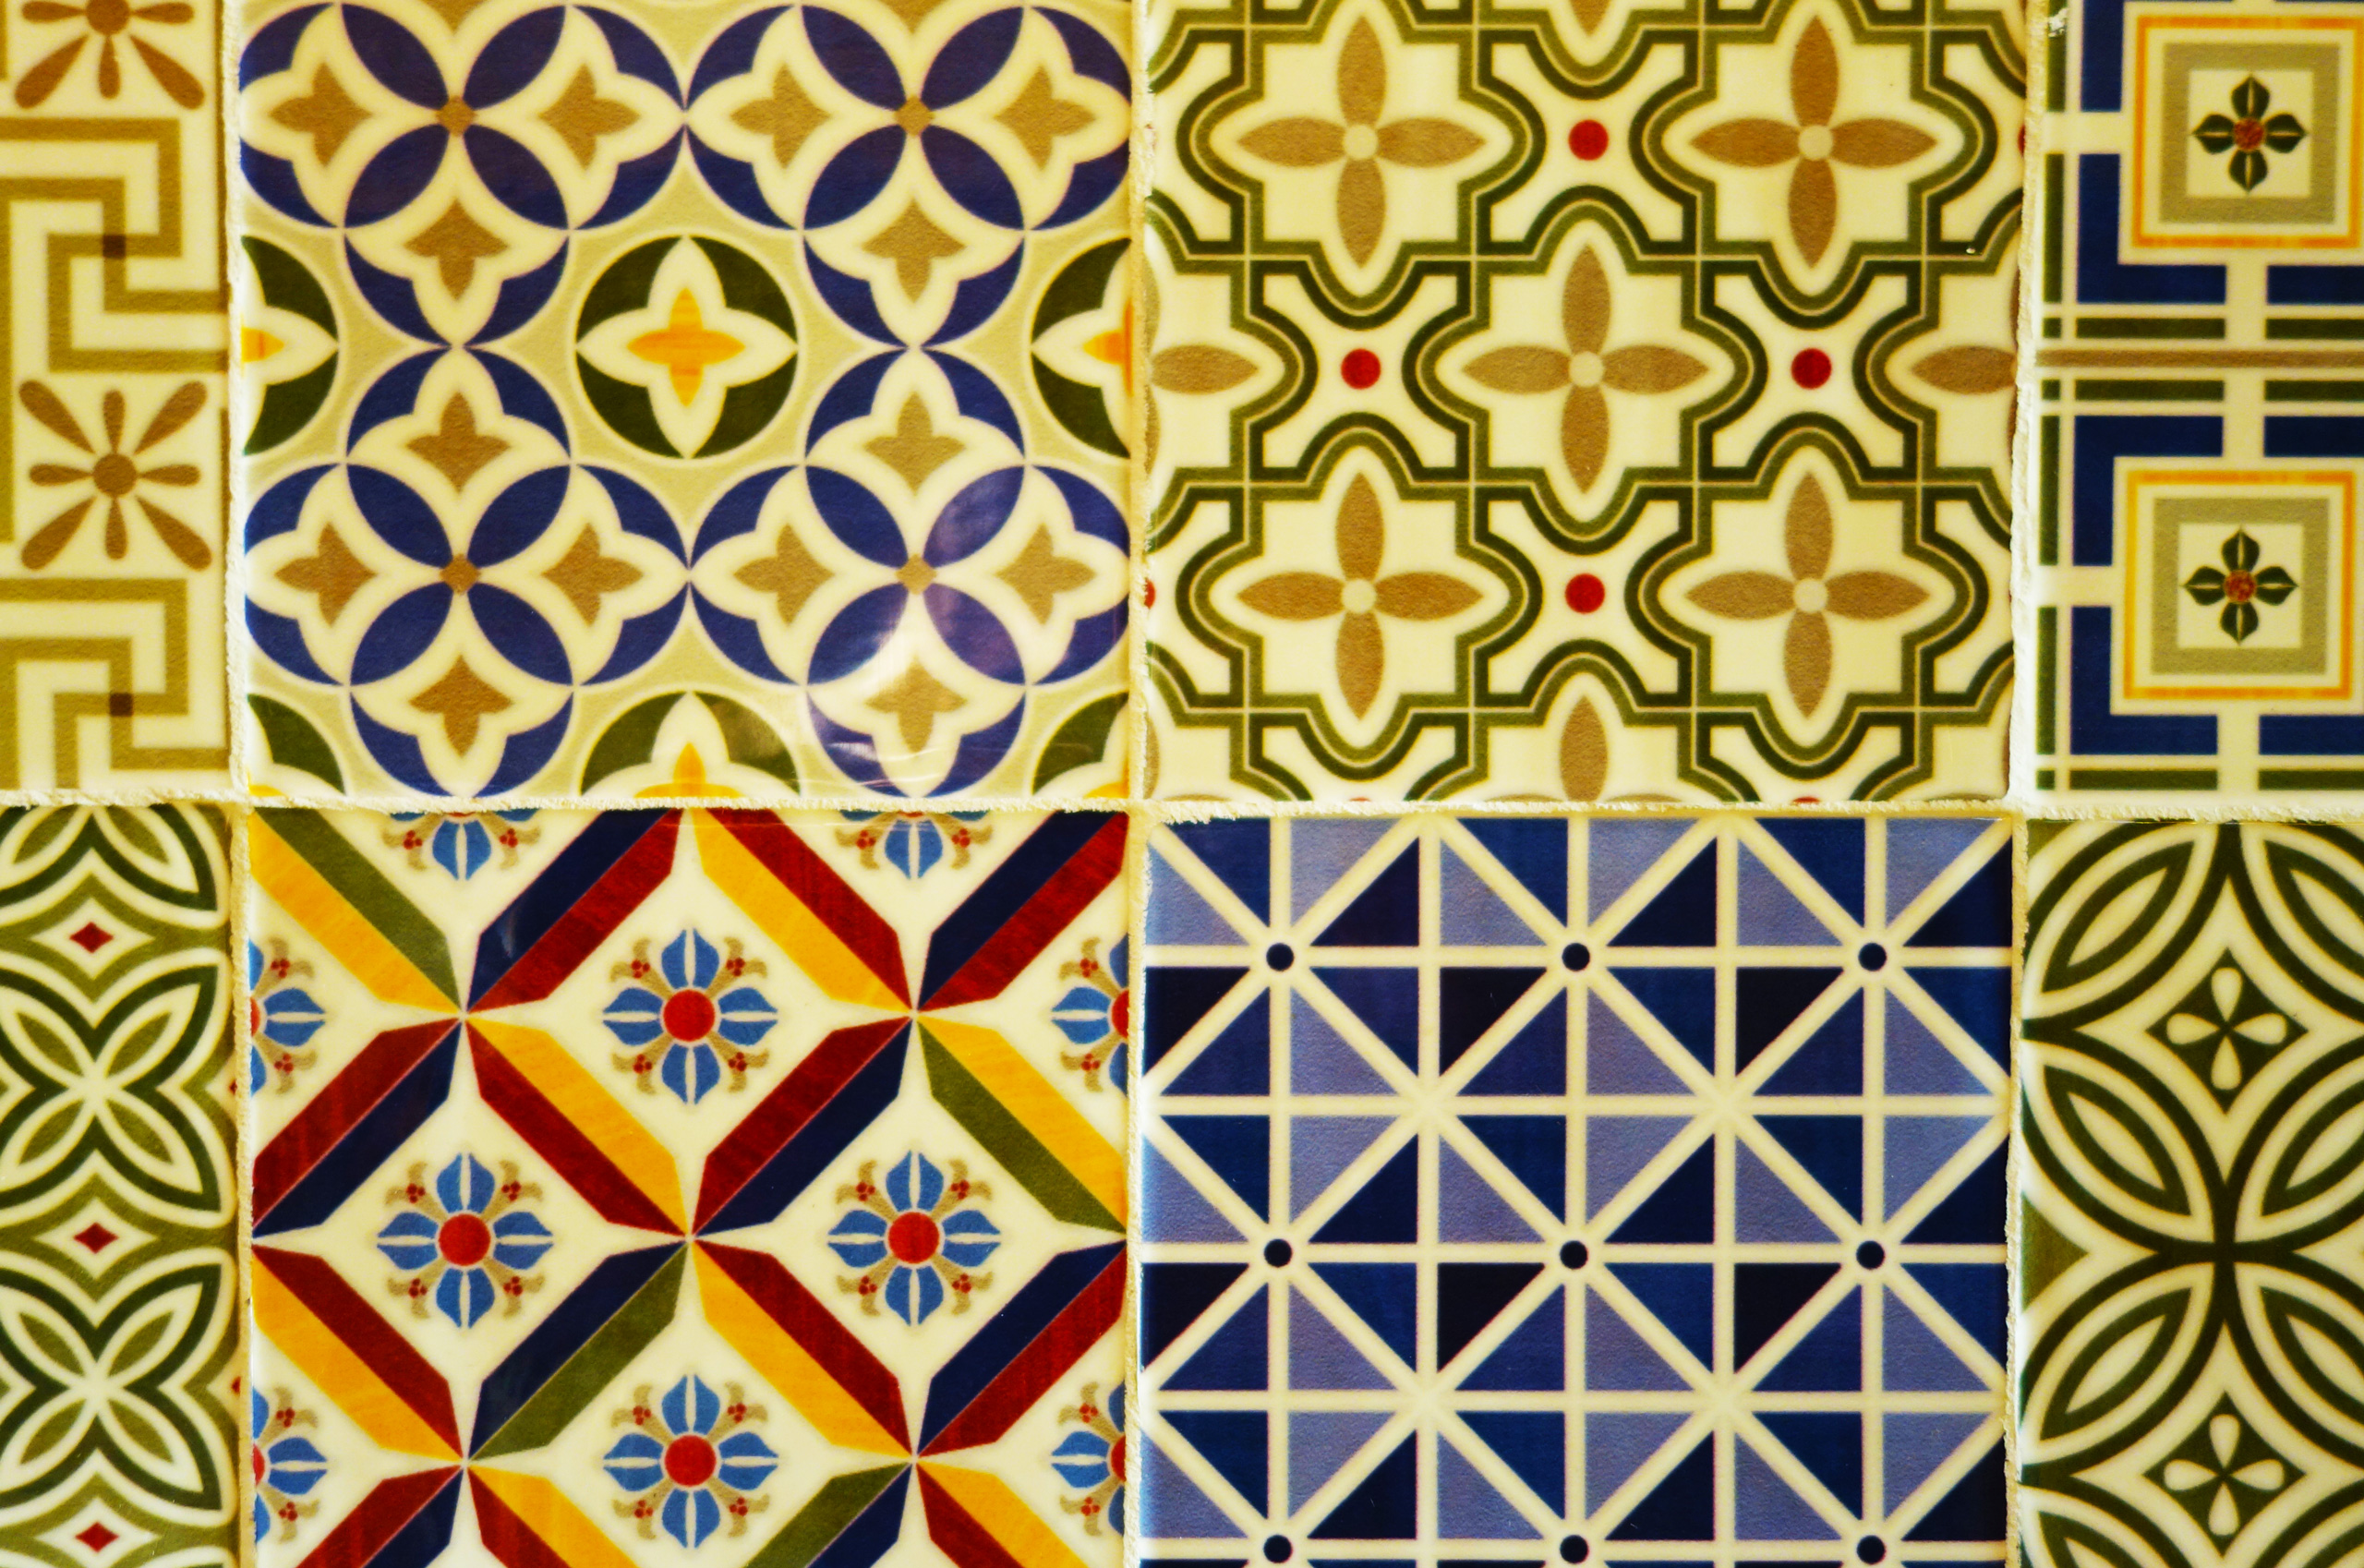 Barcelona_azulejos